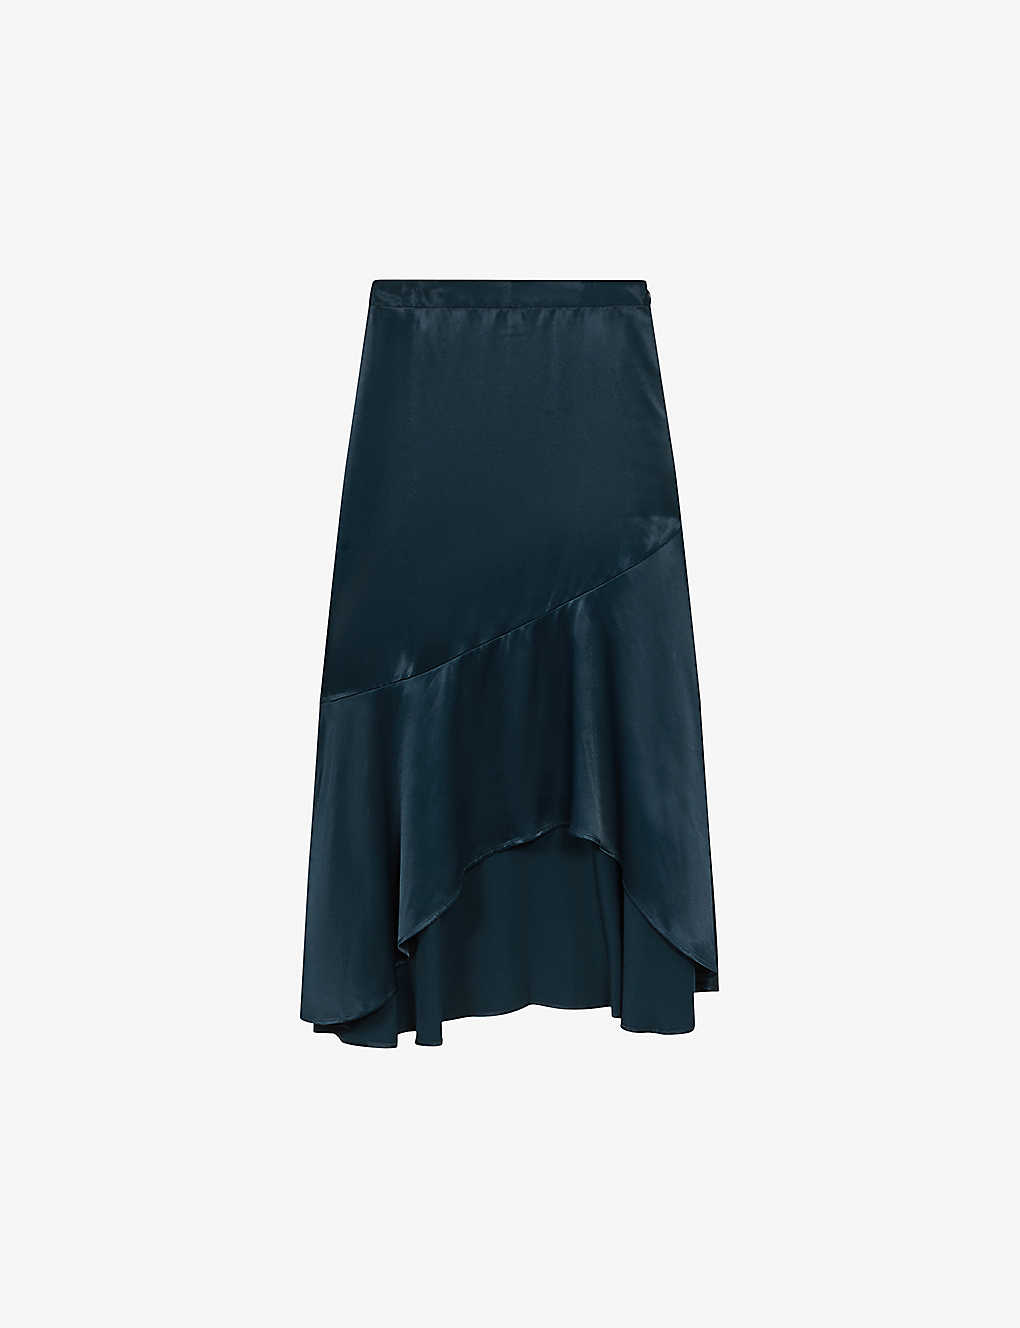 Reiss Inga - Teal Satin High Rise Midi Skirt, Us 0